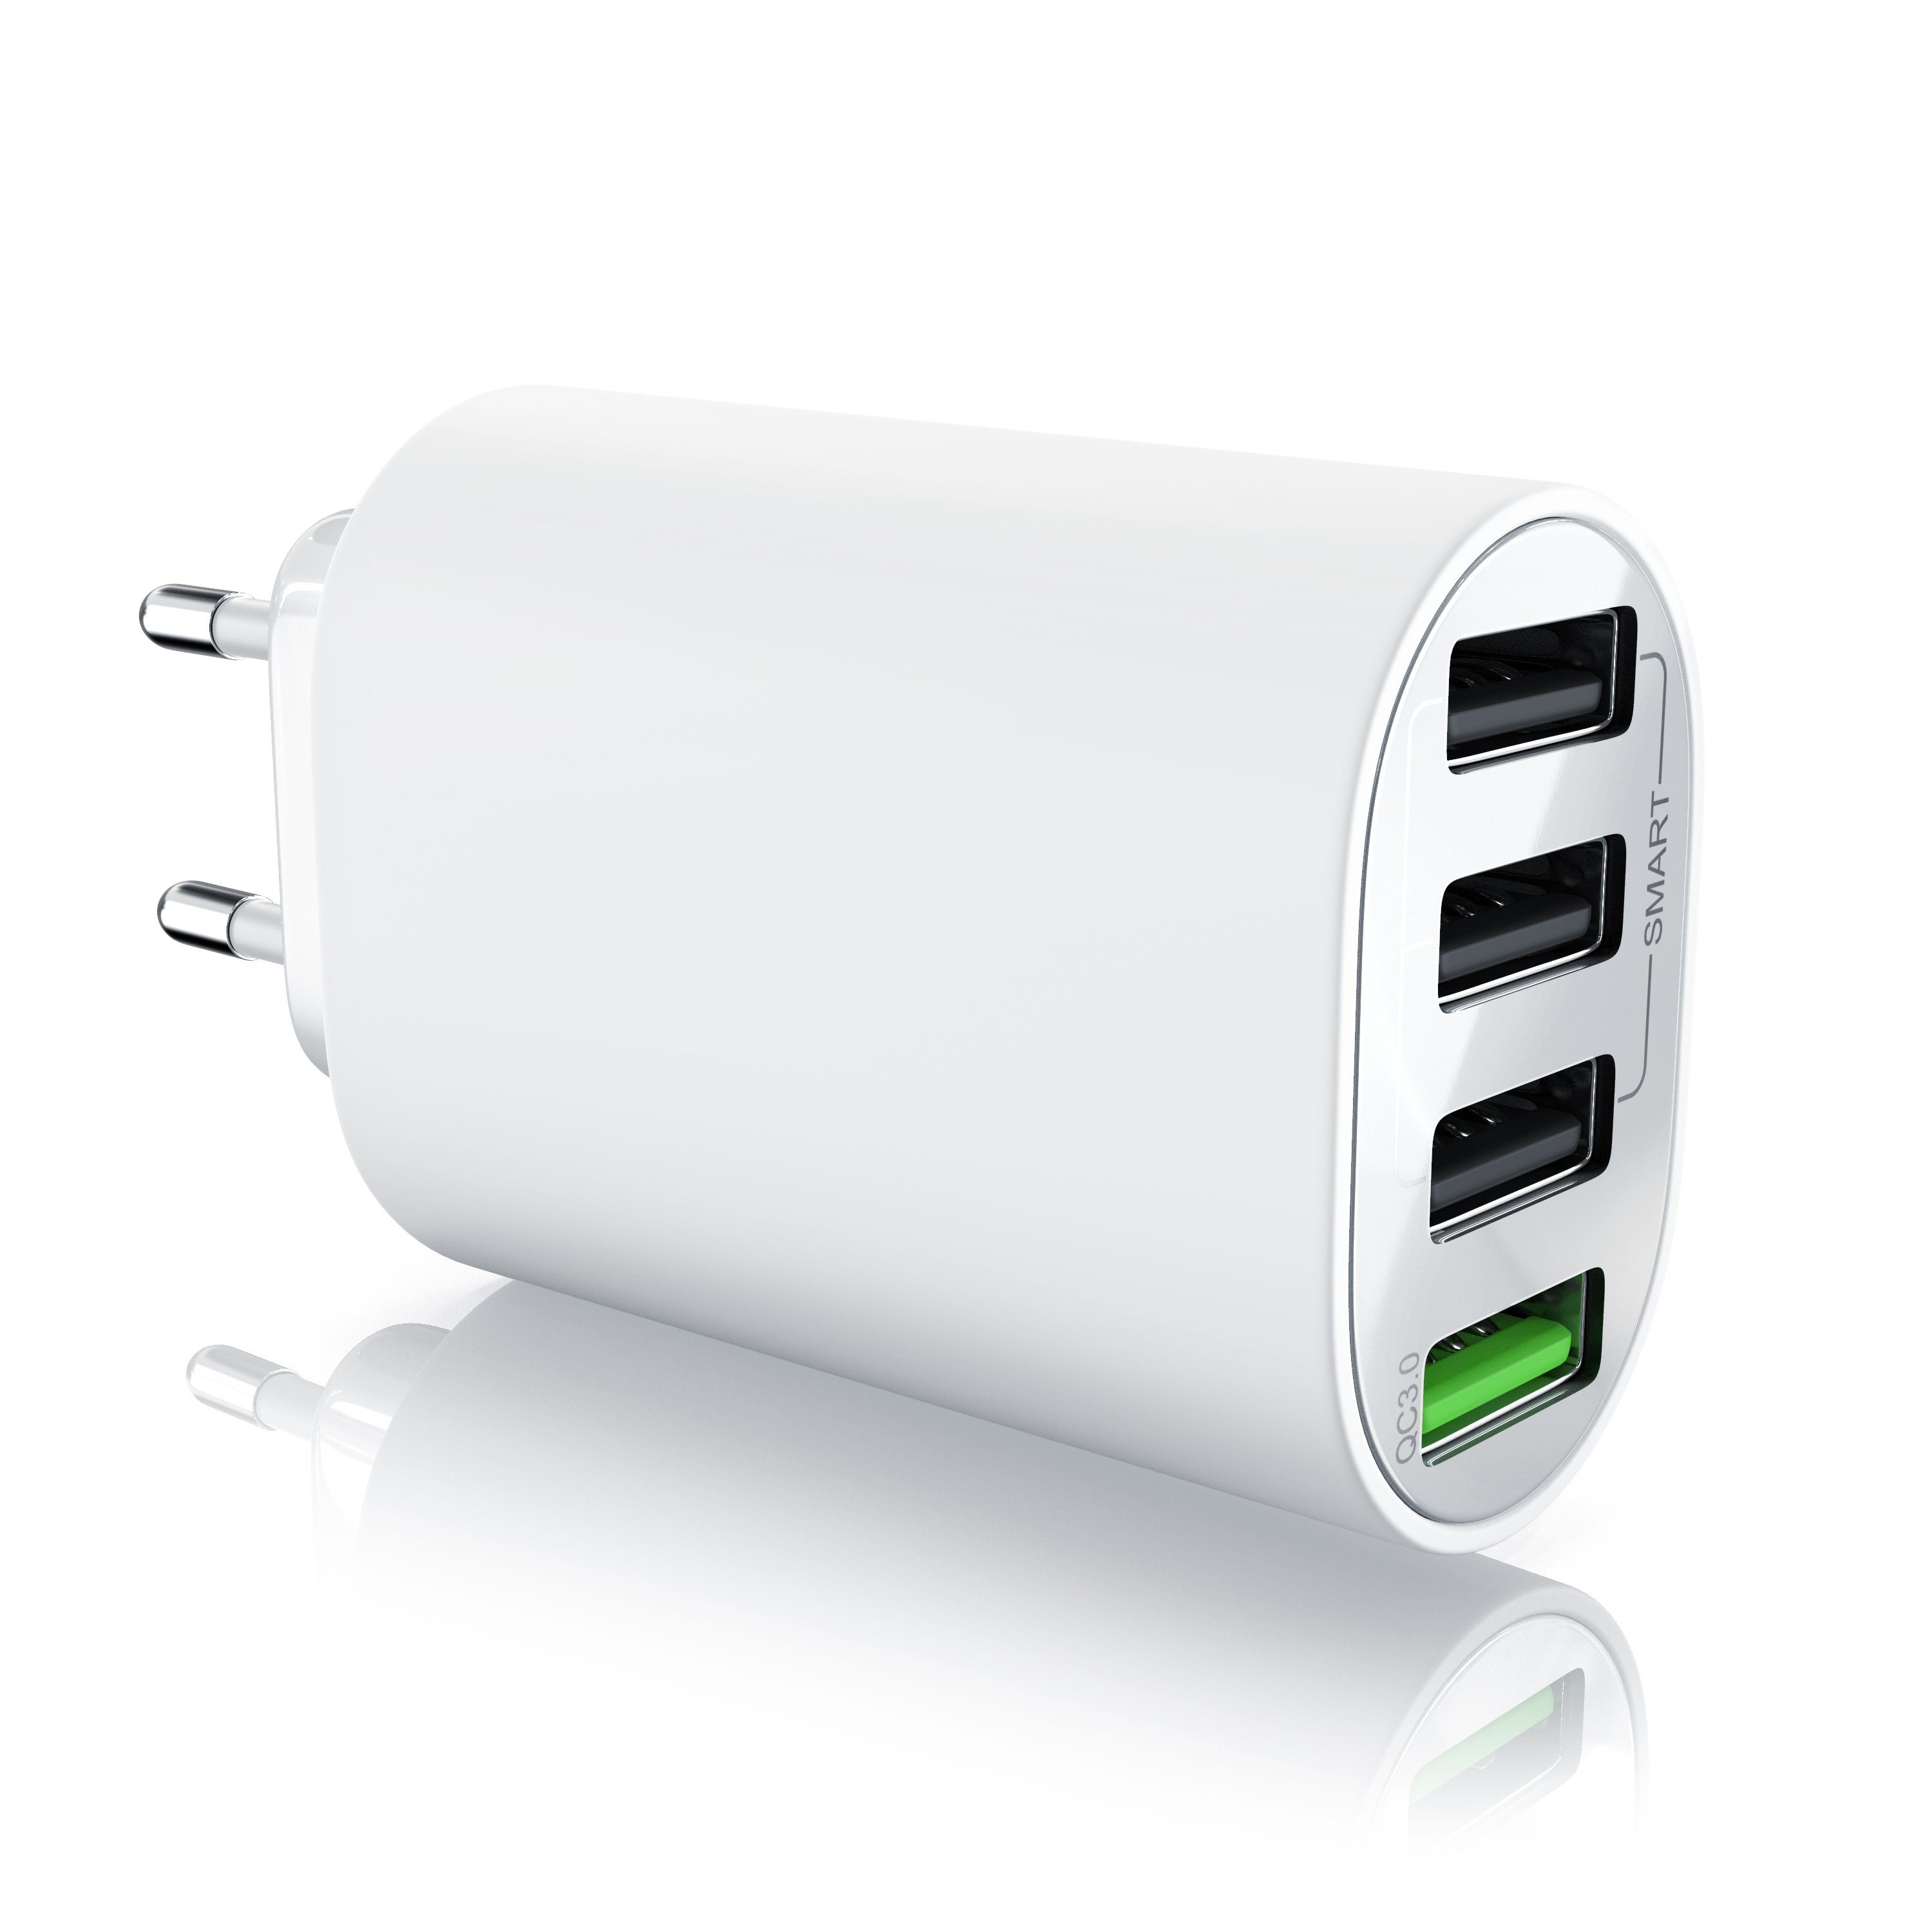 Aplic USB-Ladegerät (3400 mA, 4 Port USB Ladegerät mit Quick Charge 3.0 QC  Netzteil mit Smart Charge & Solid Charge)